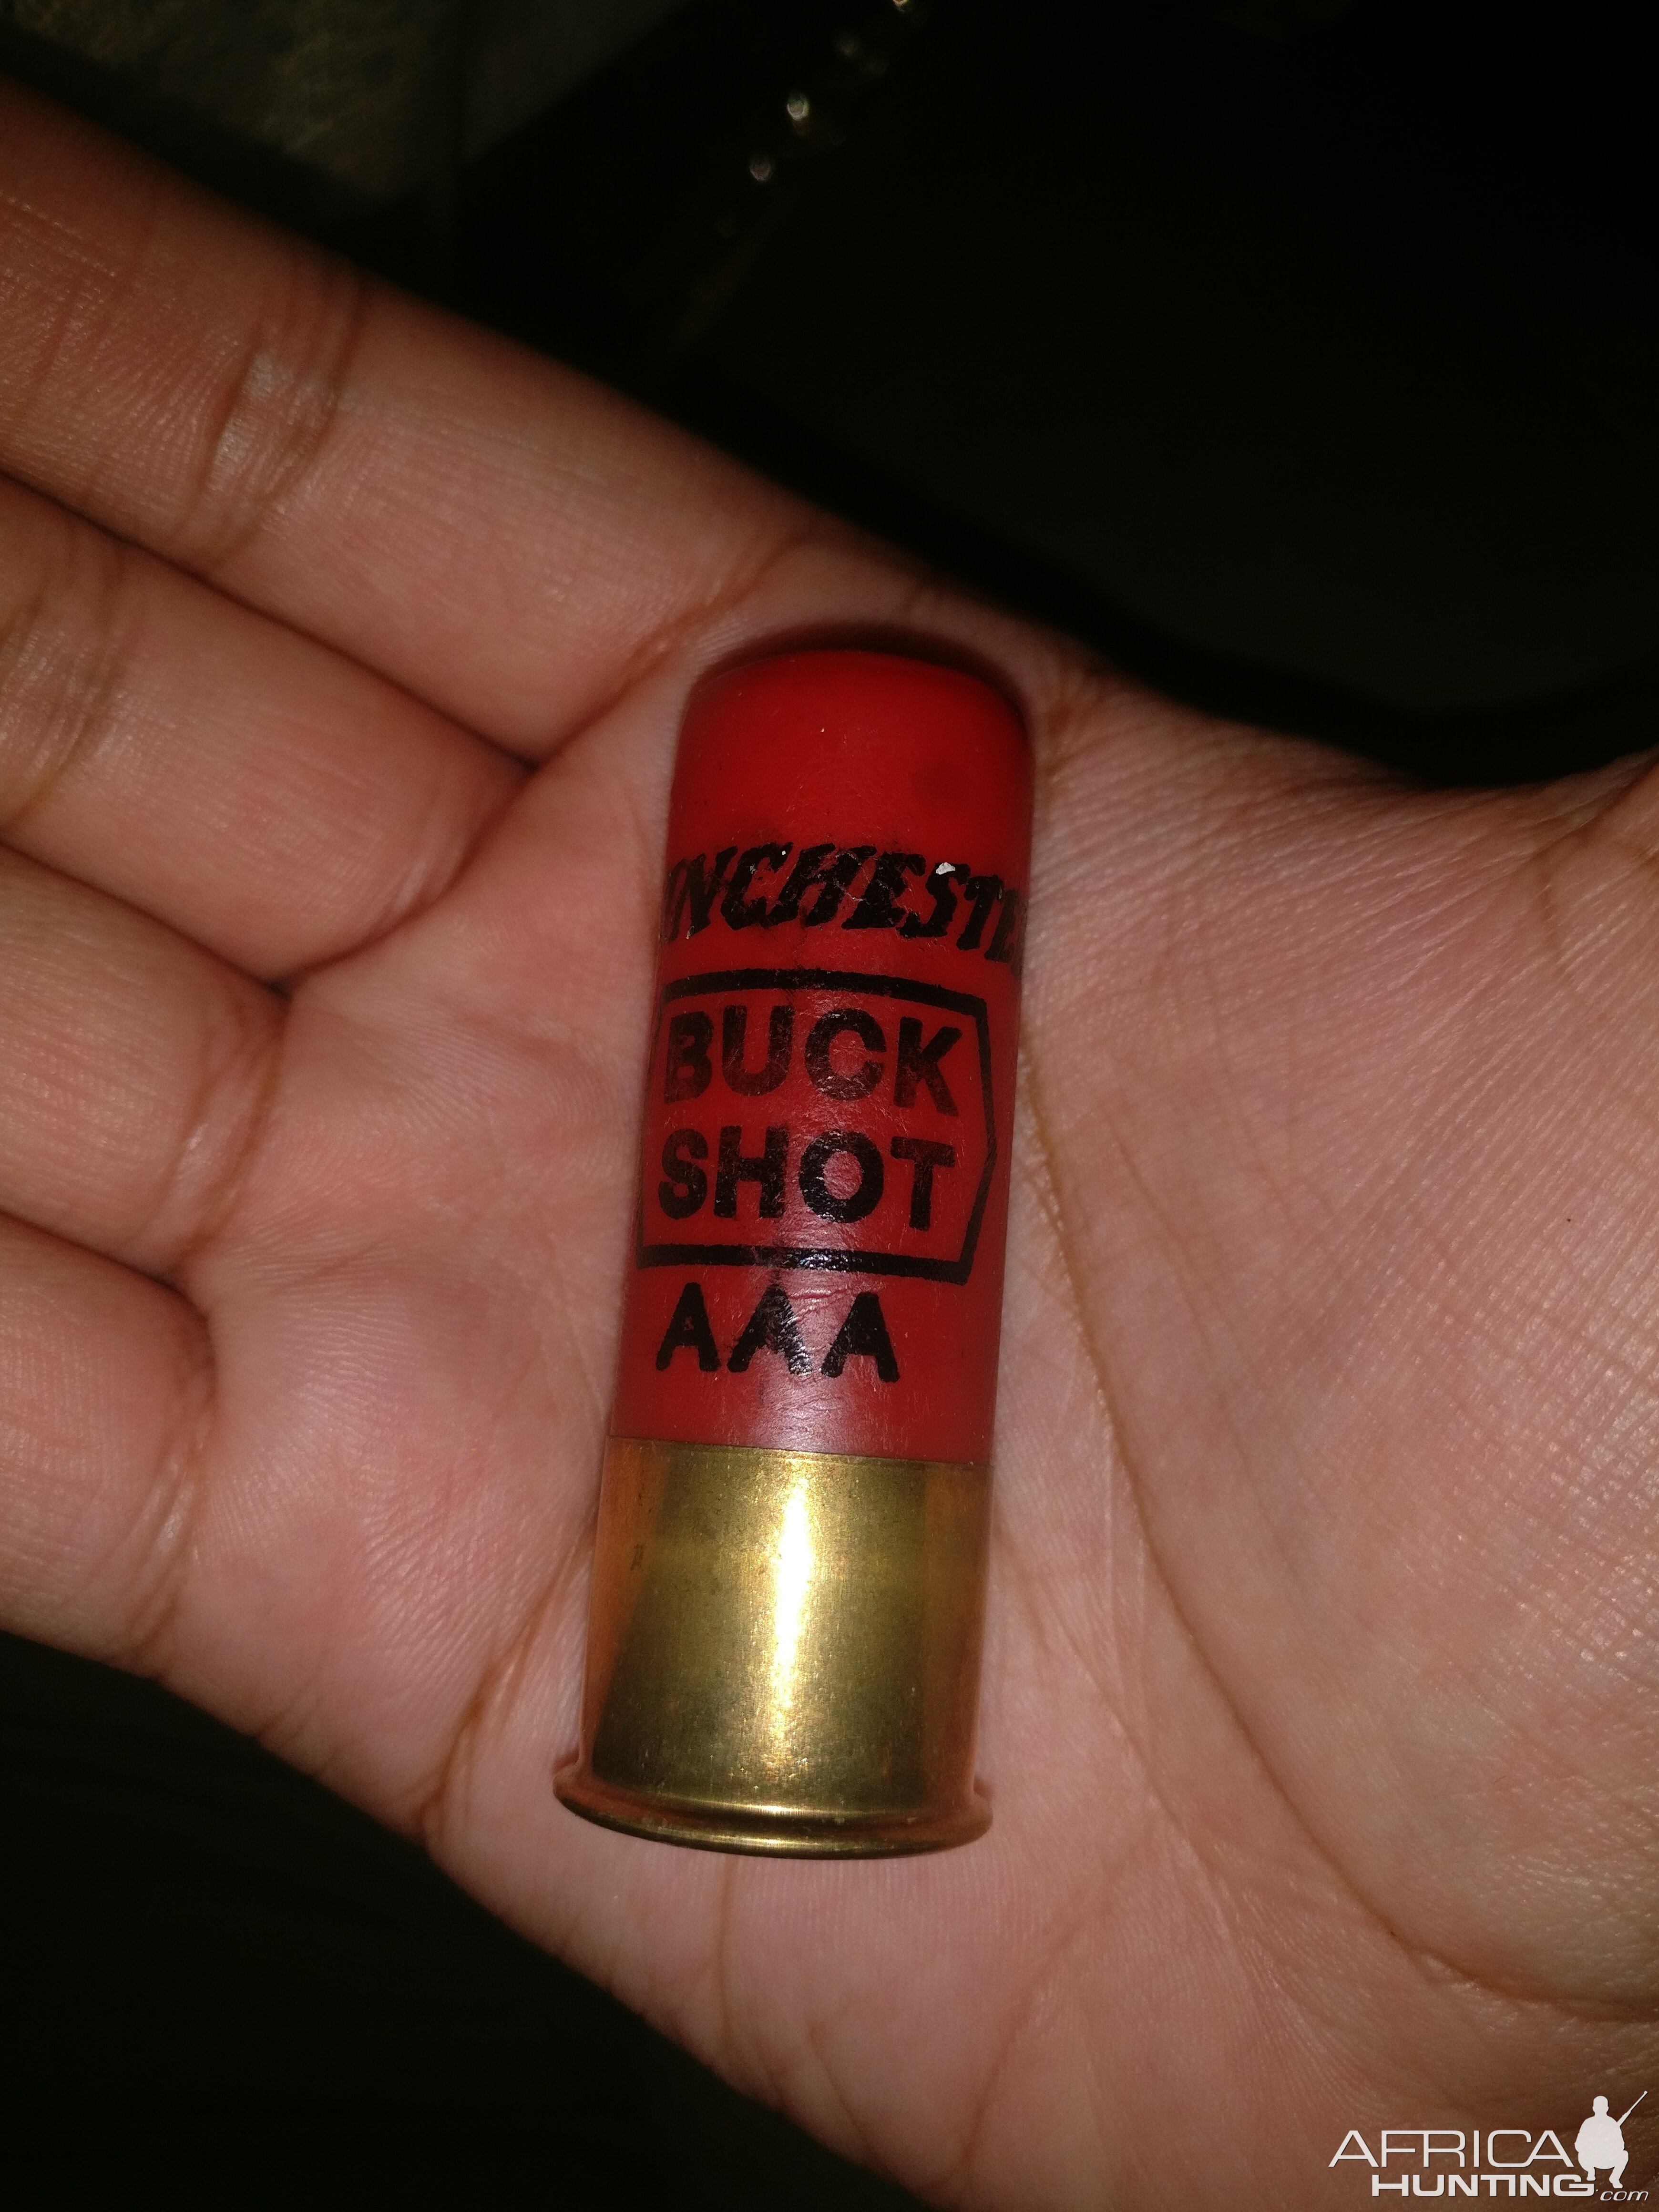 Winchester Australia 12 Bore 32 gram AAA cartridge